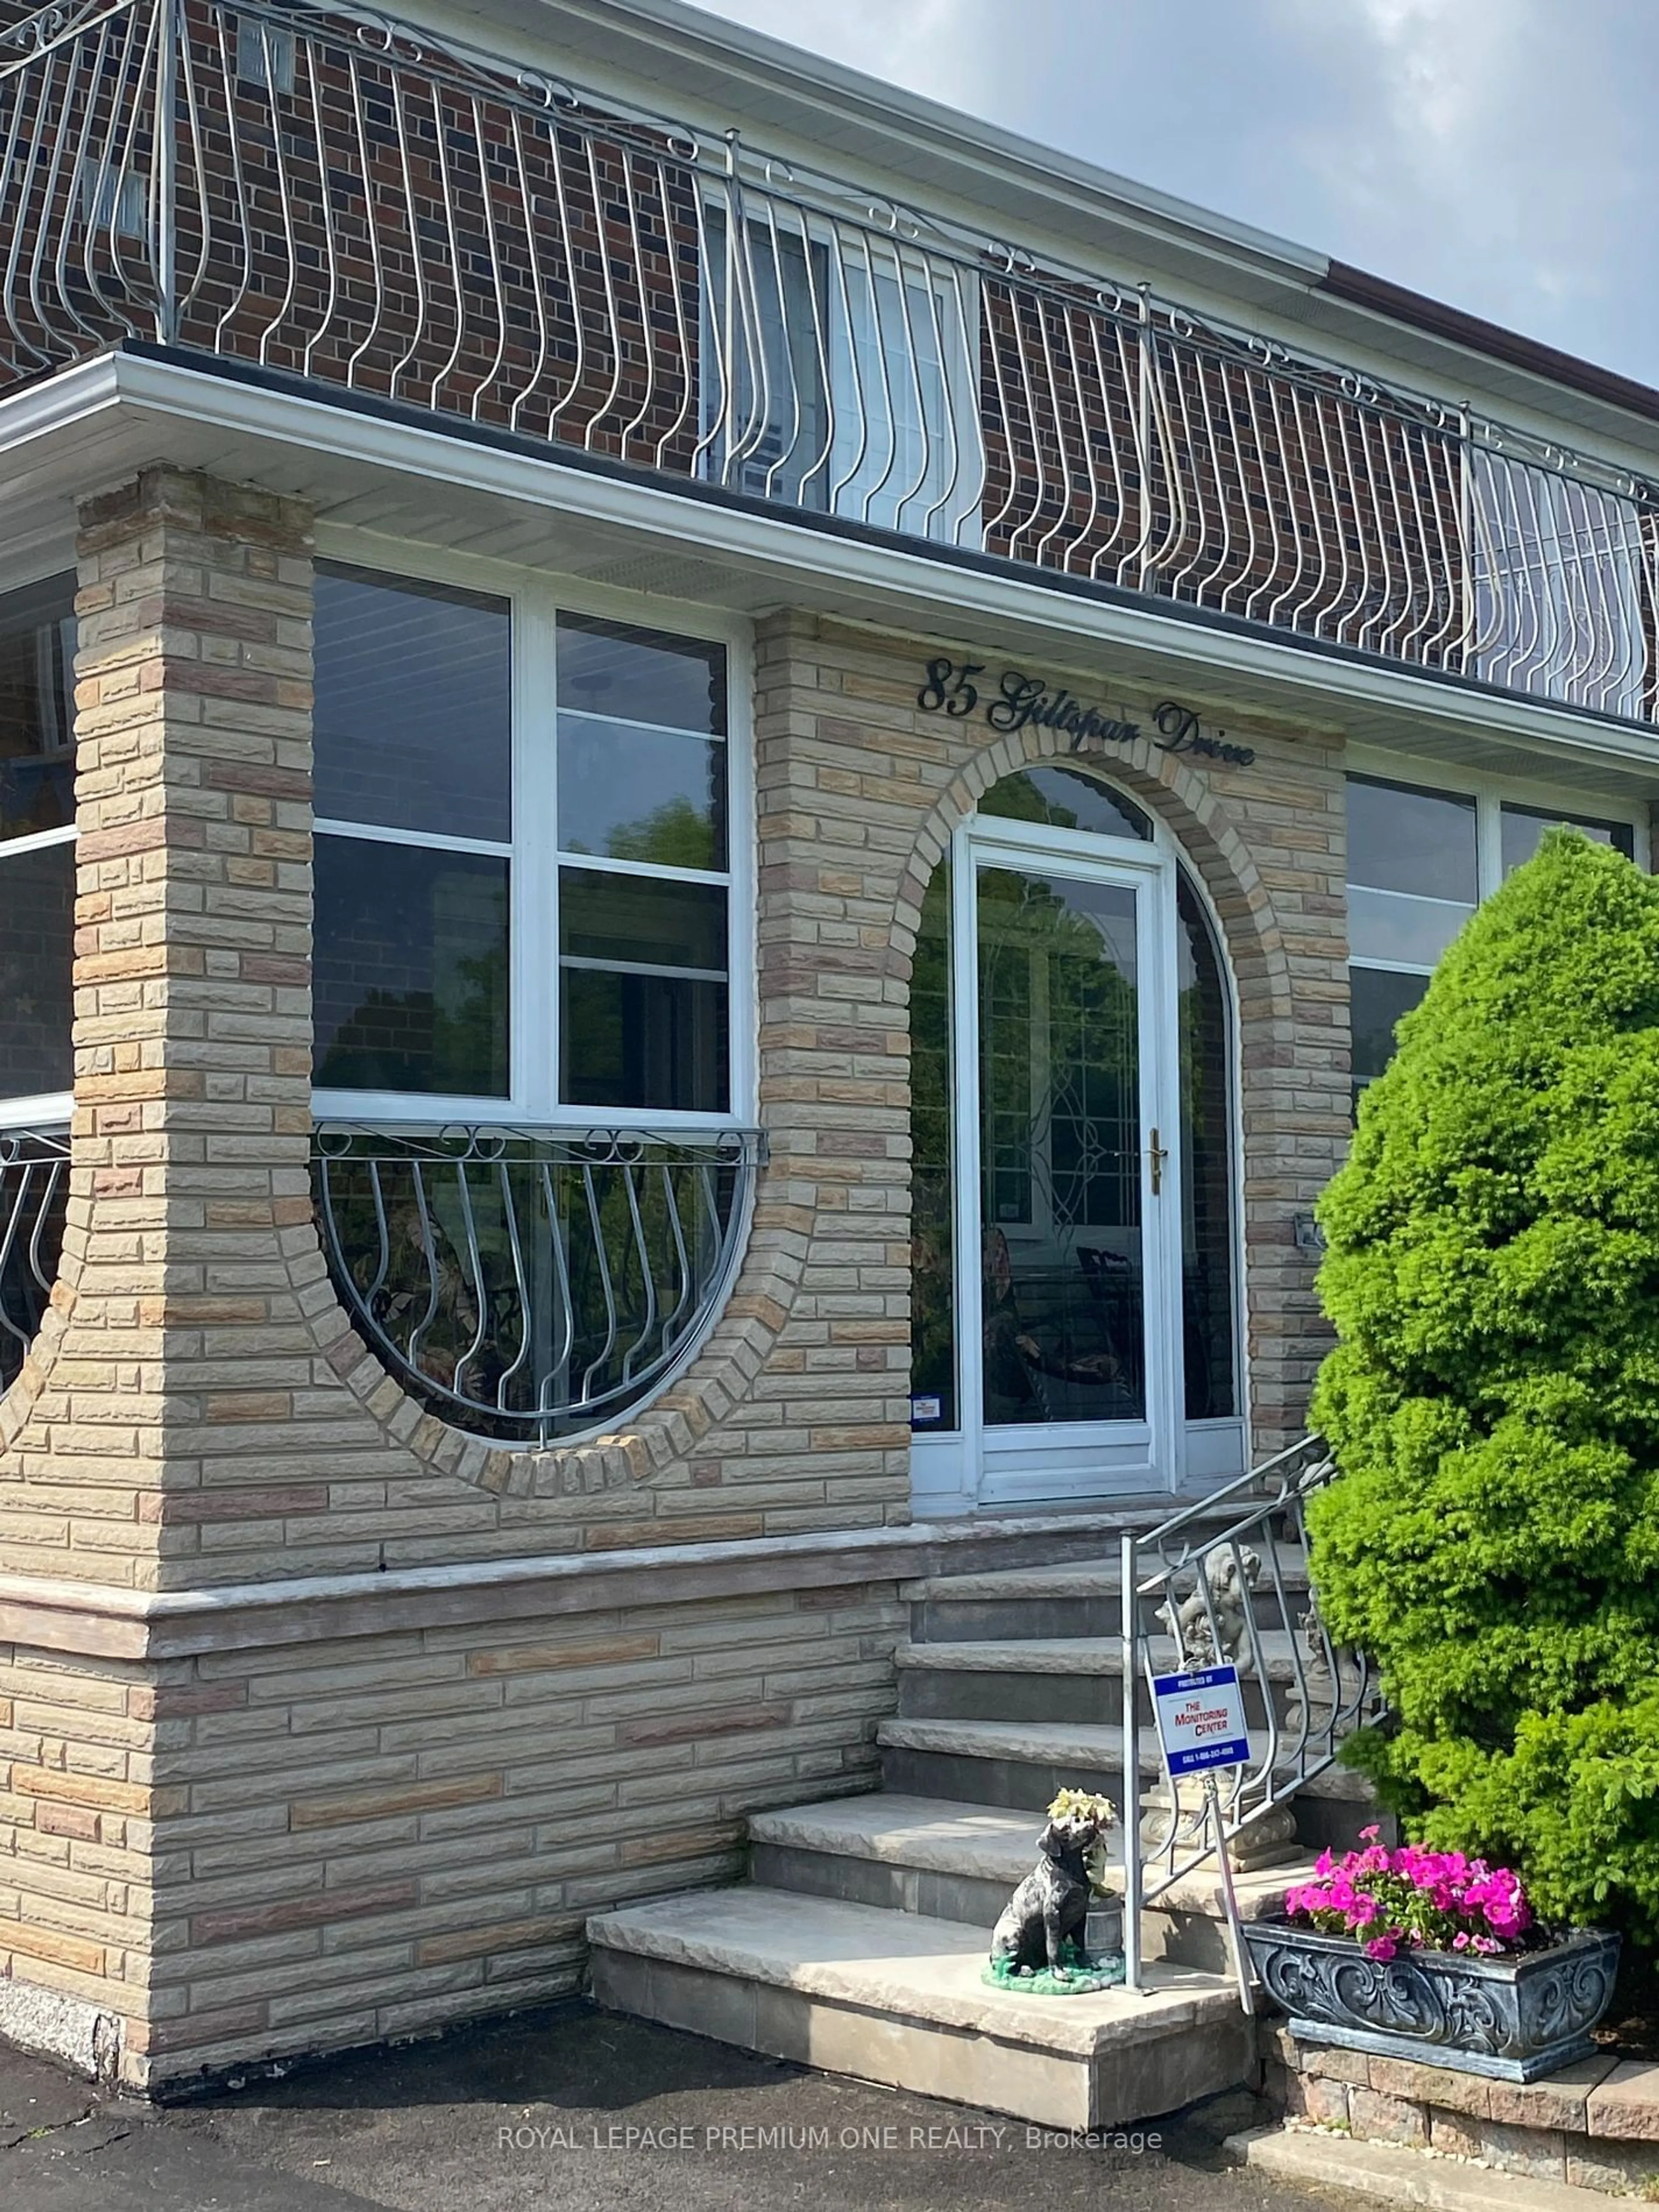 Home with vinyl exterior material for 85 GILTSPUR Dr, Toronto Ontario M3L 1M4